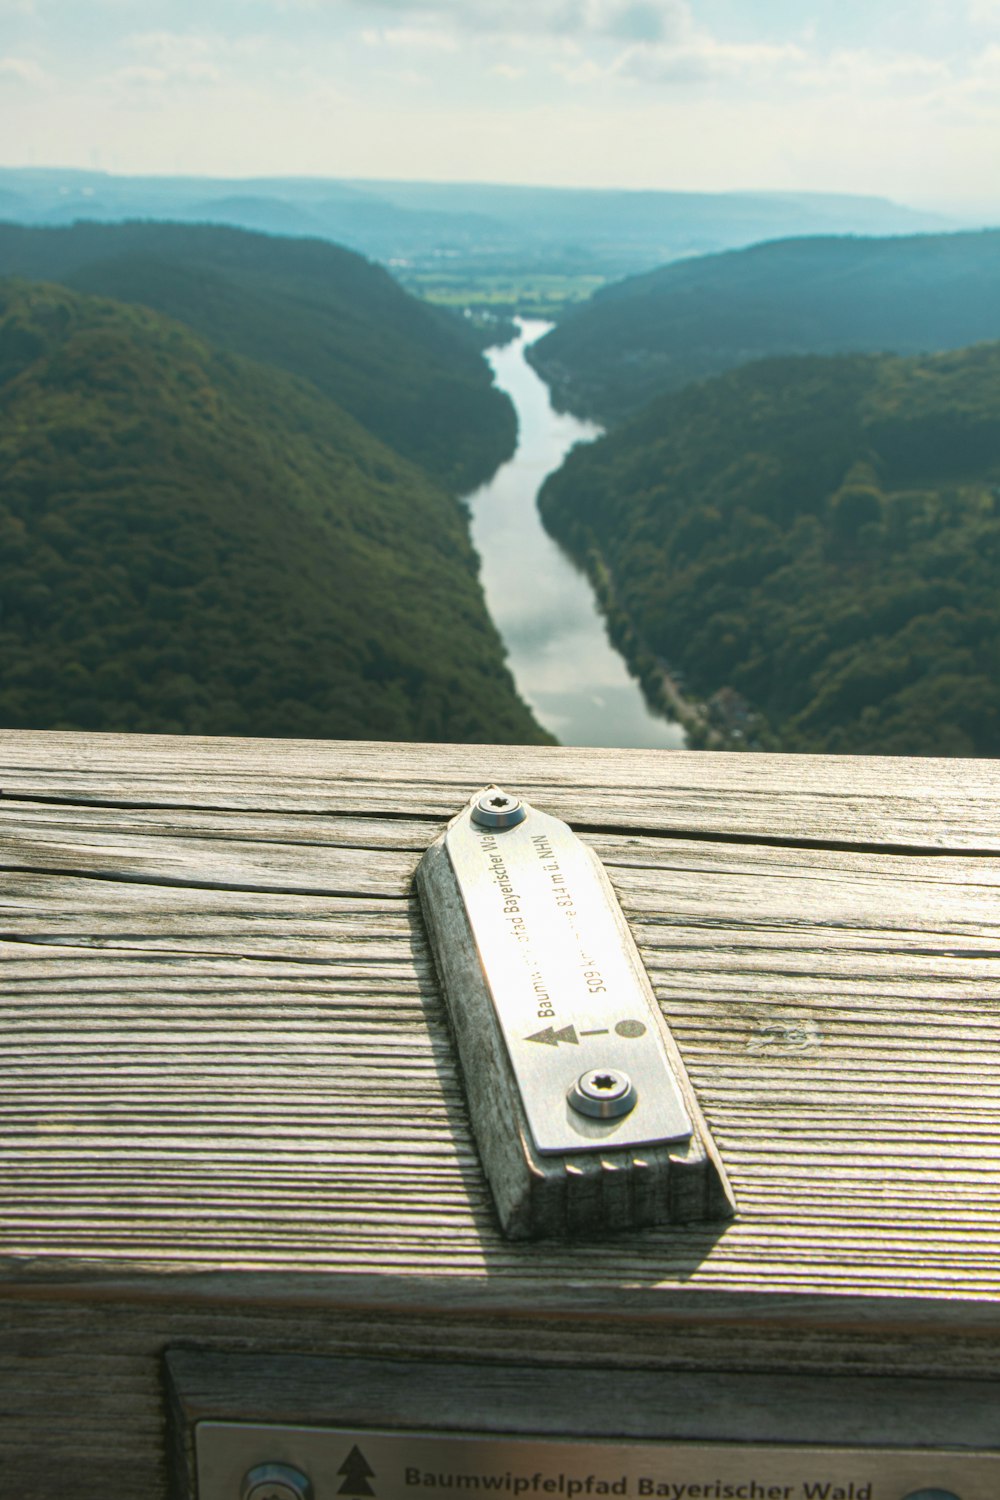 a wooden deck overlooking a river